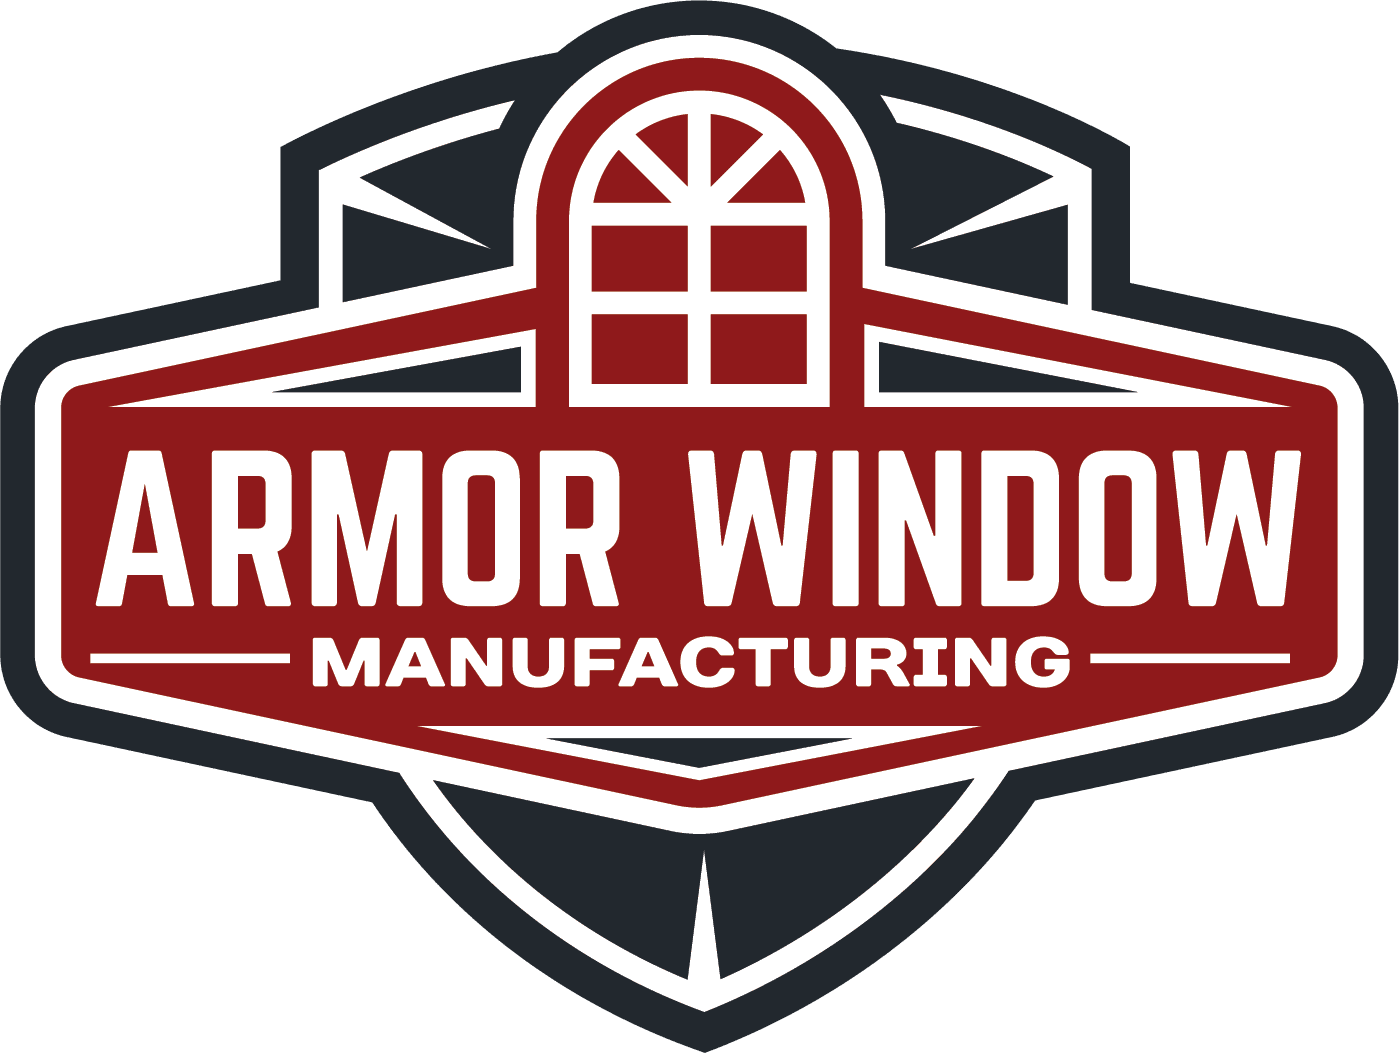 Armor Window Manufacturing